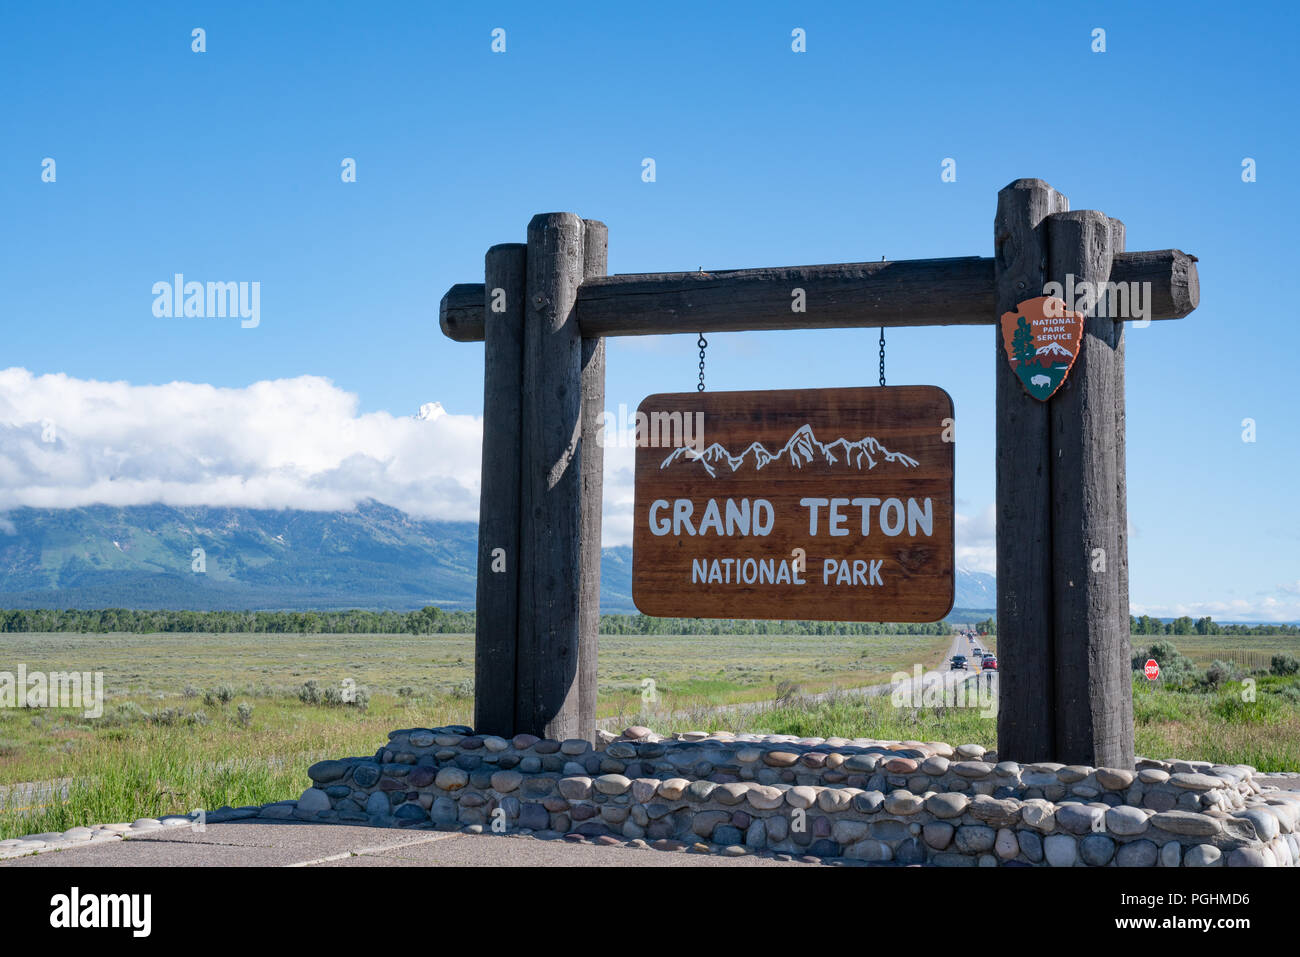 JACKSON, WY - Juni 24, 2018: Am Eingang zum Grand Teton National Park in Jackson, Wyoming Willkommen Anmelden Stockfoto